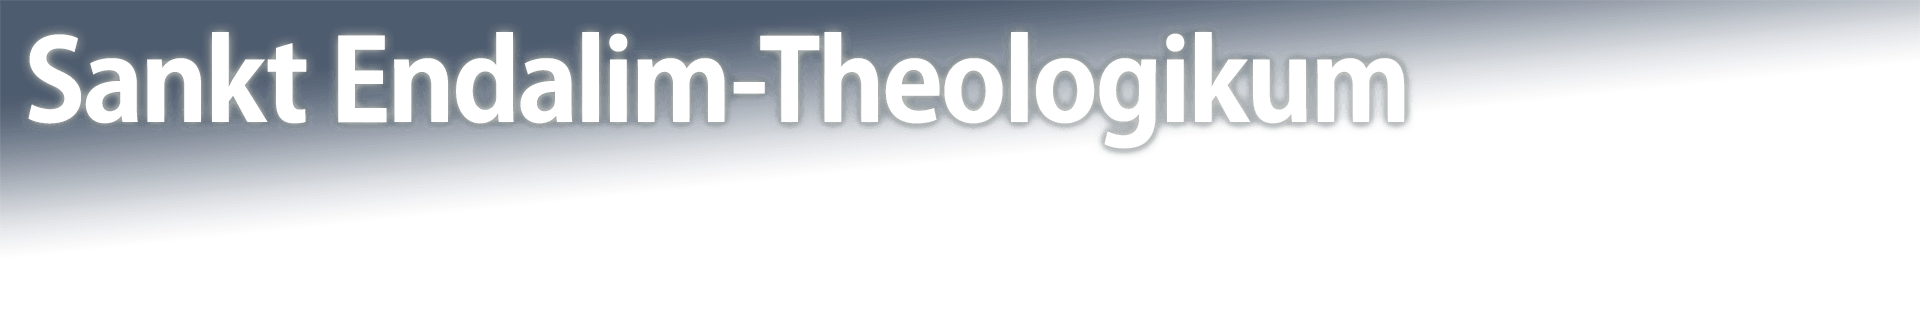 Sankt Endalim-Theologikum